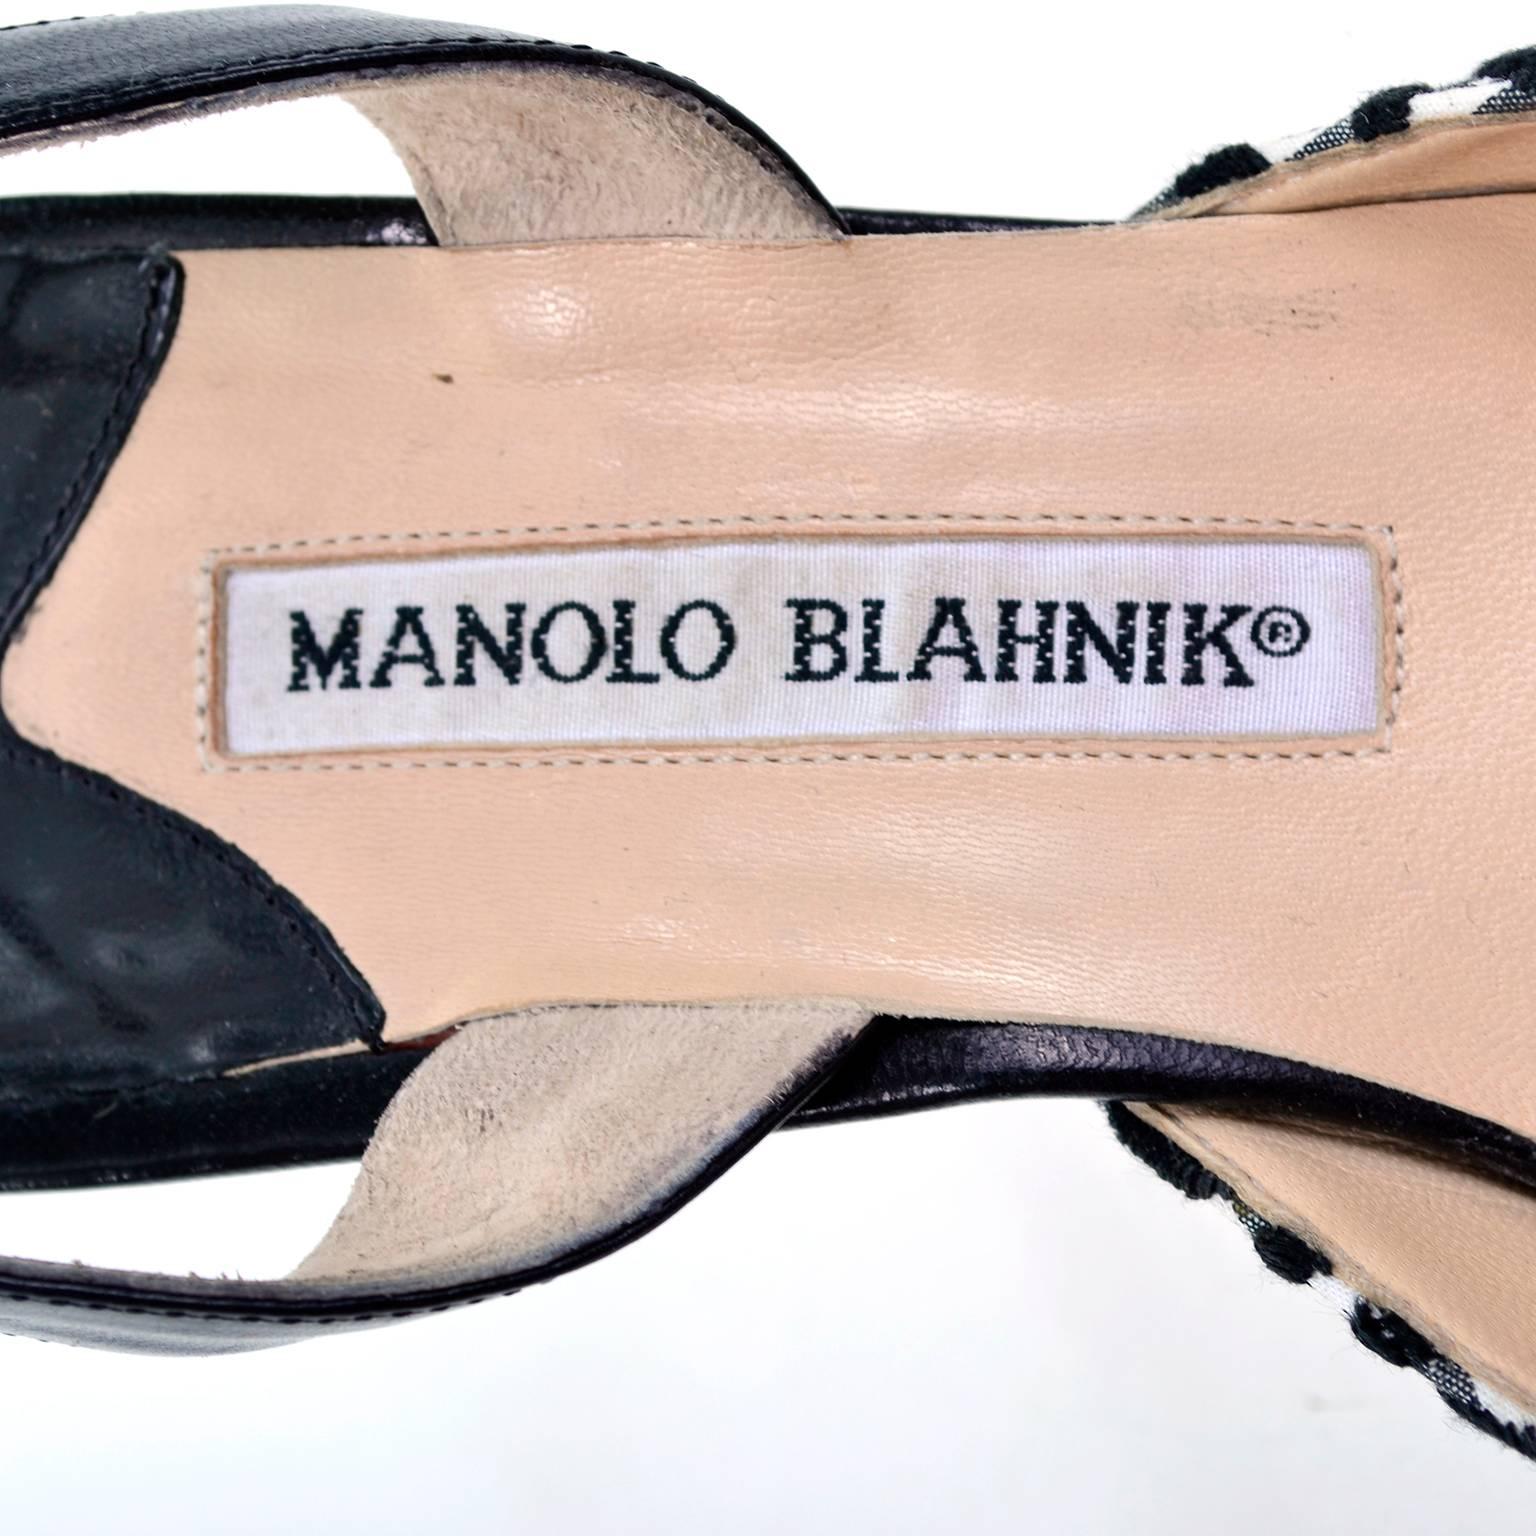 Manolo Blahnik Carolyne Sling Back Shoes in Black & White Swirls Size 37.5 1